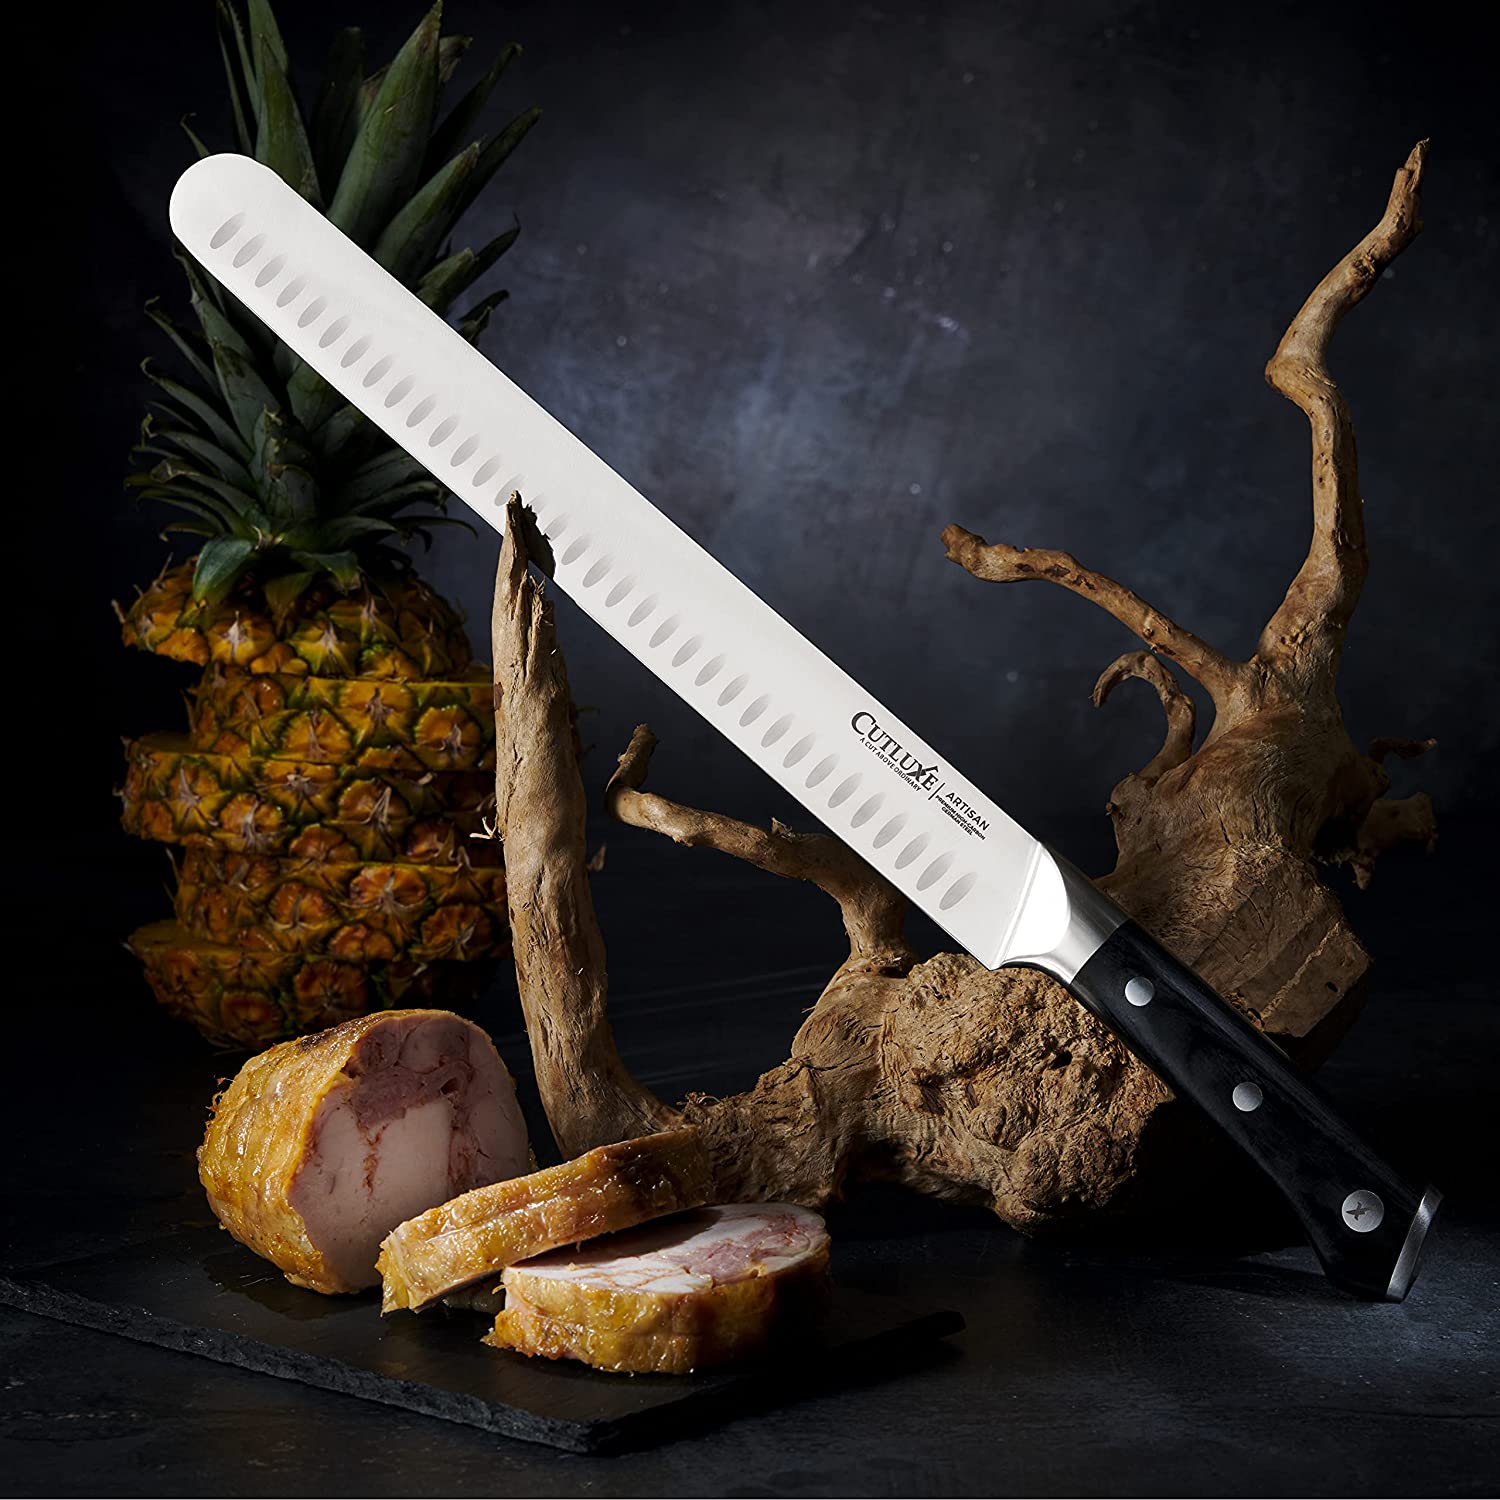 CUTLUXE Slicing Carving Knife – 12 Brisket Knife, Razor Sharp